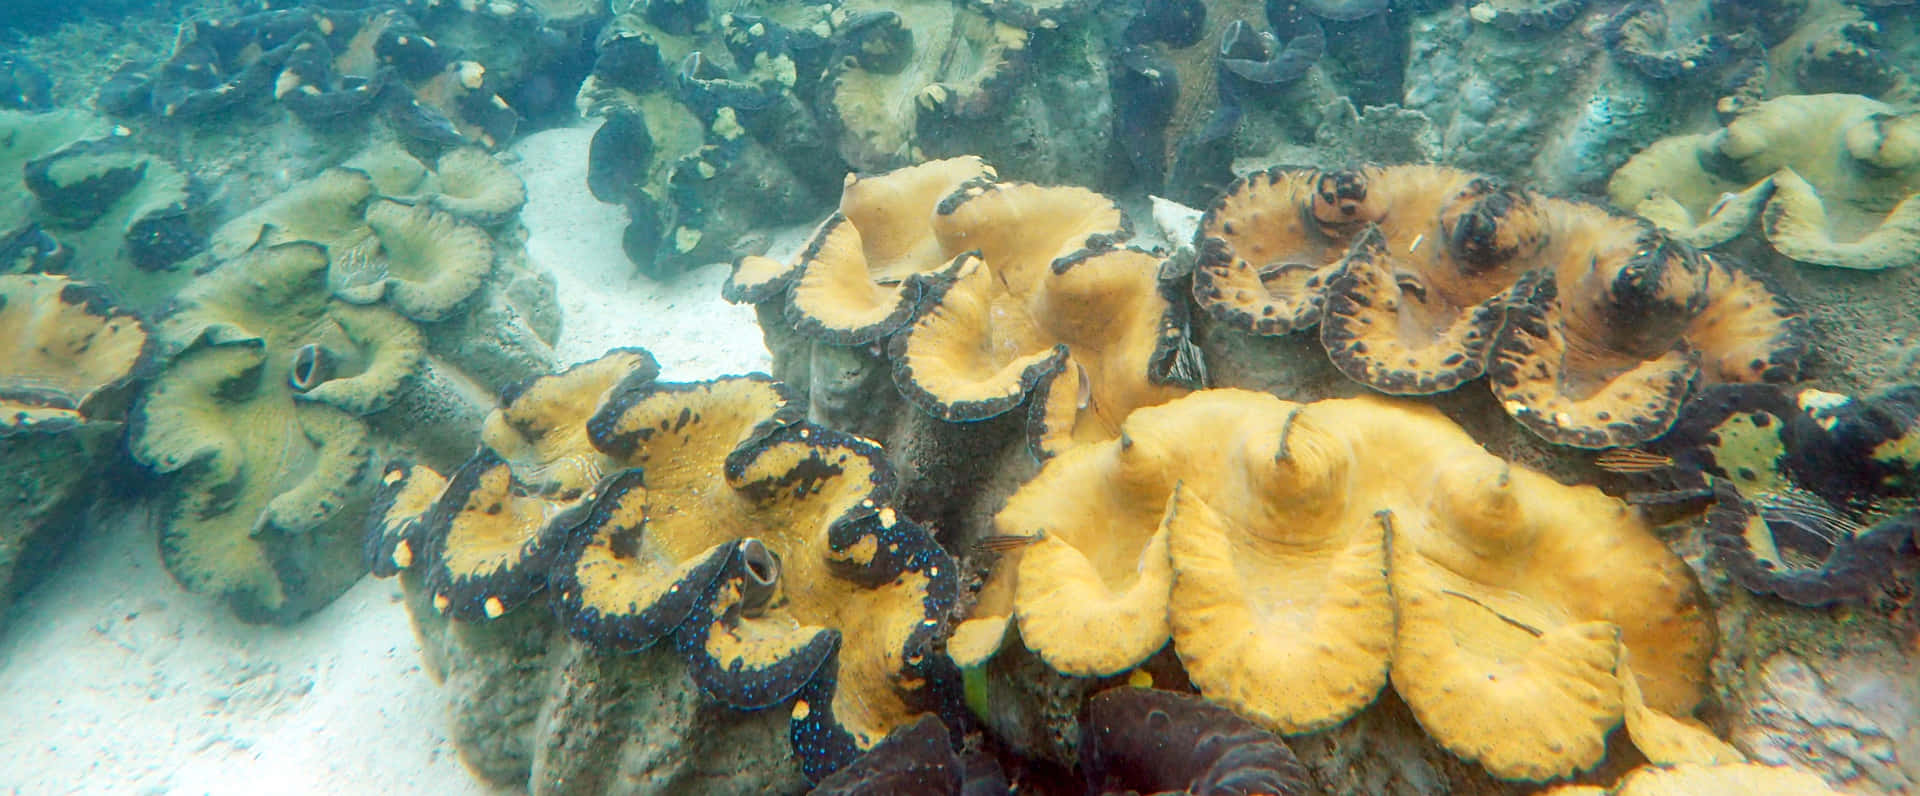 Giant Clams Underwater Reef Wallpaper